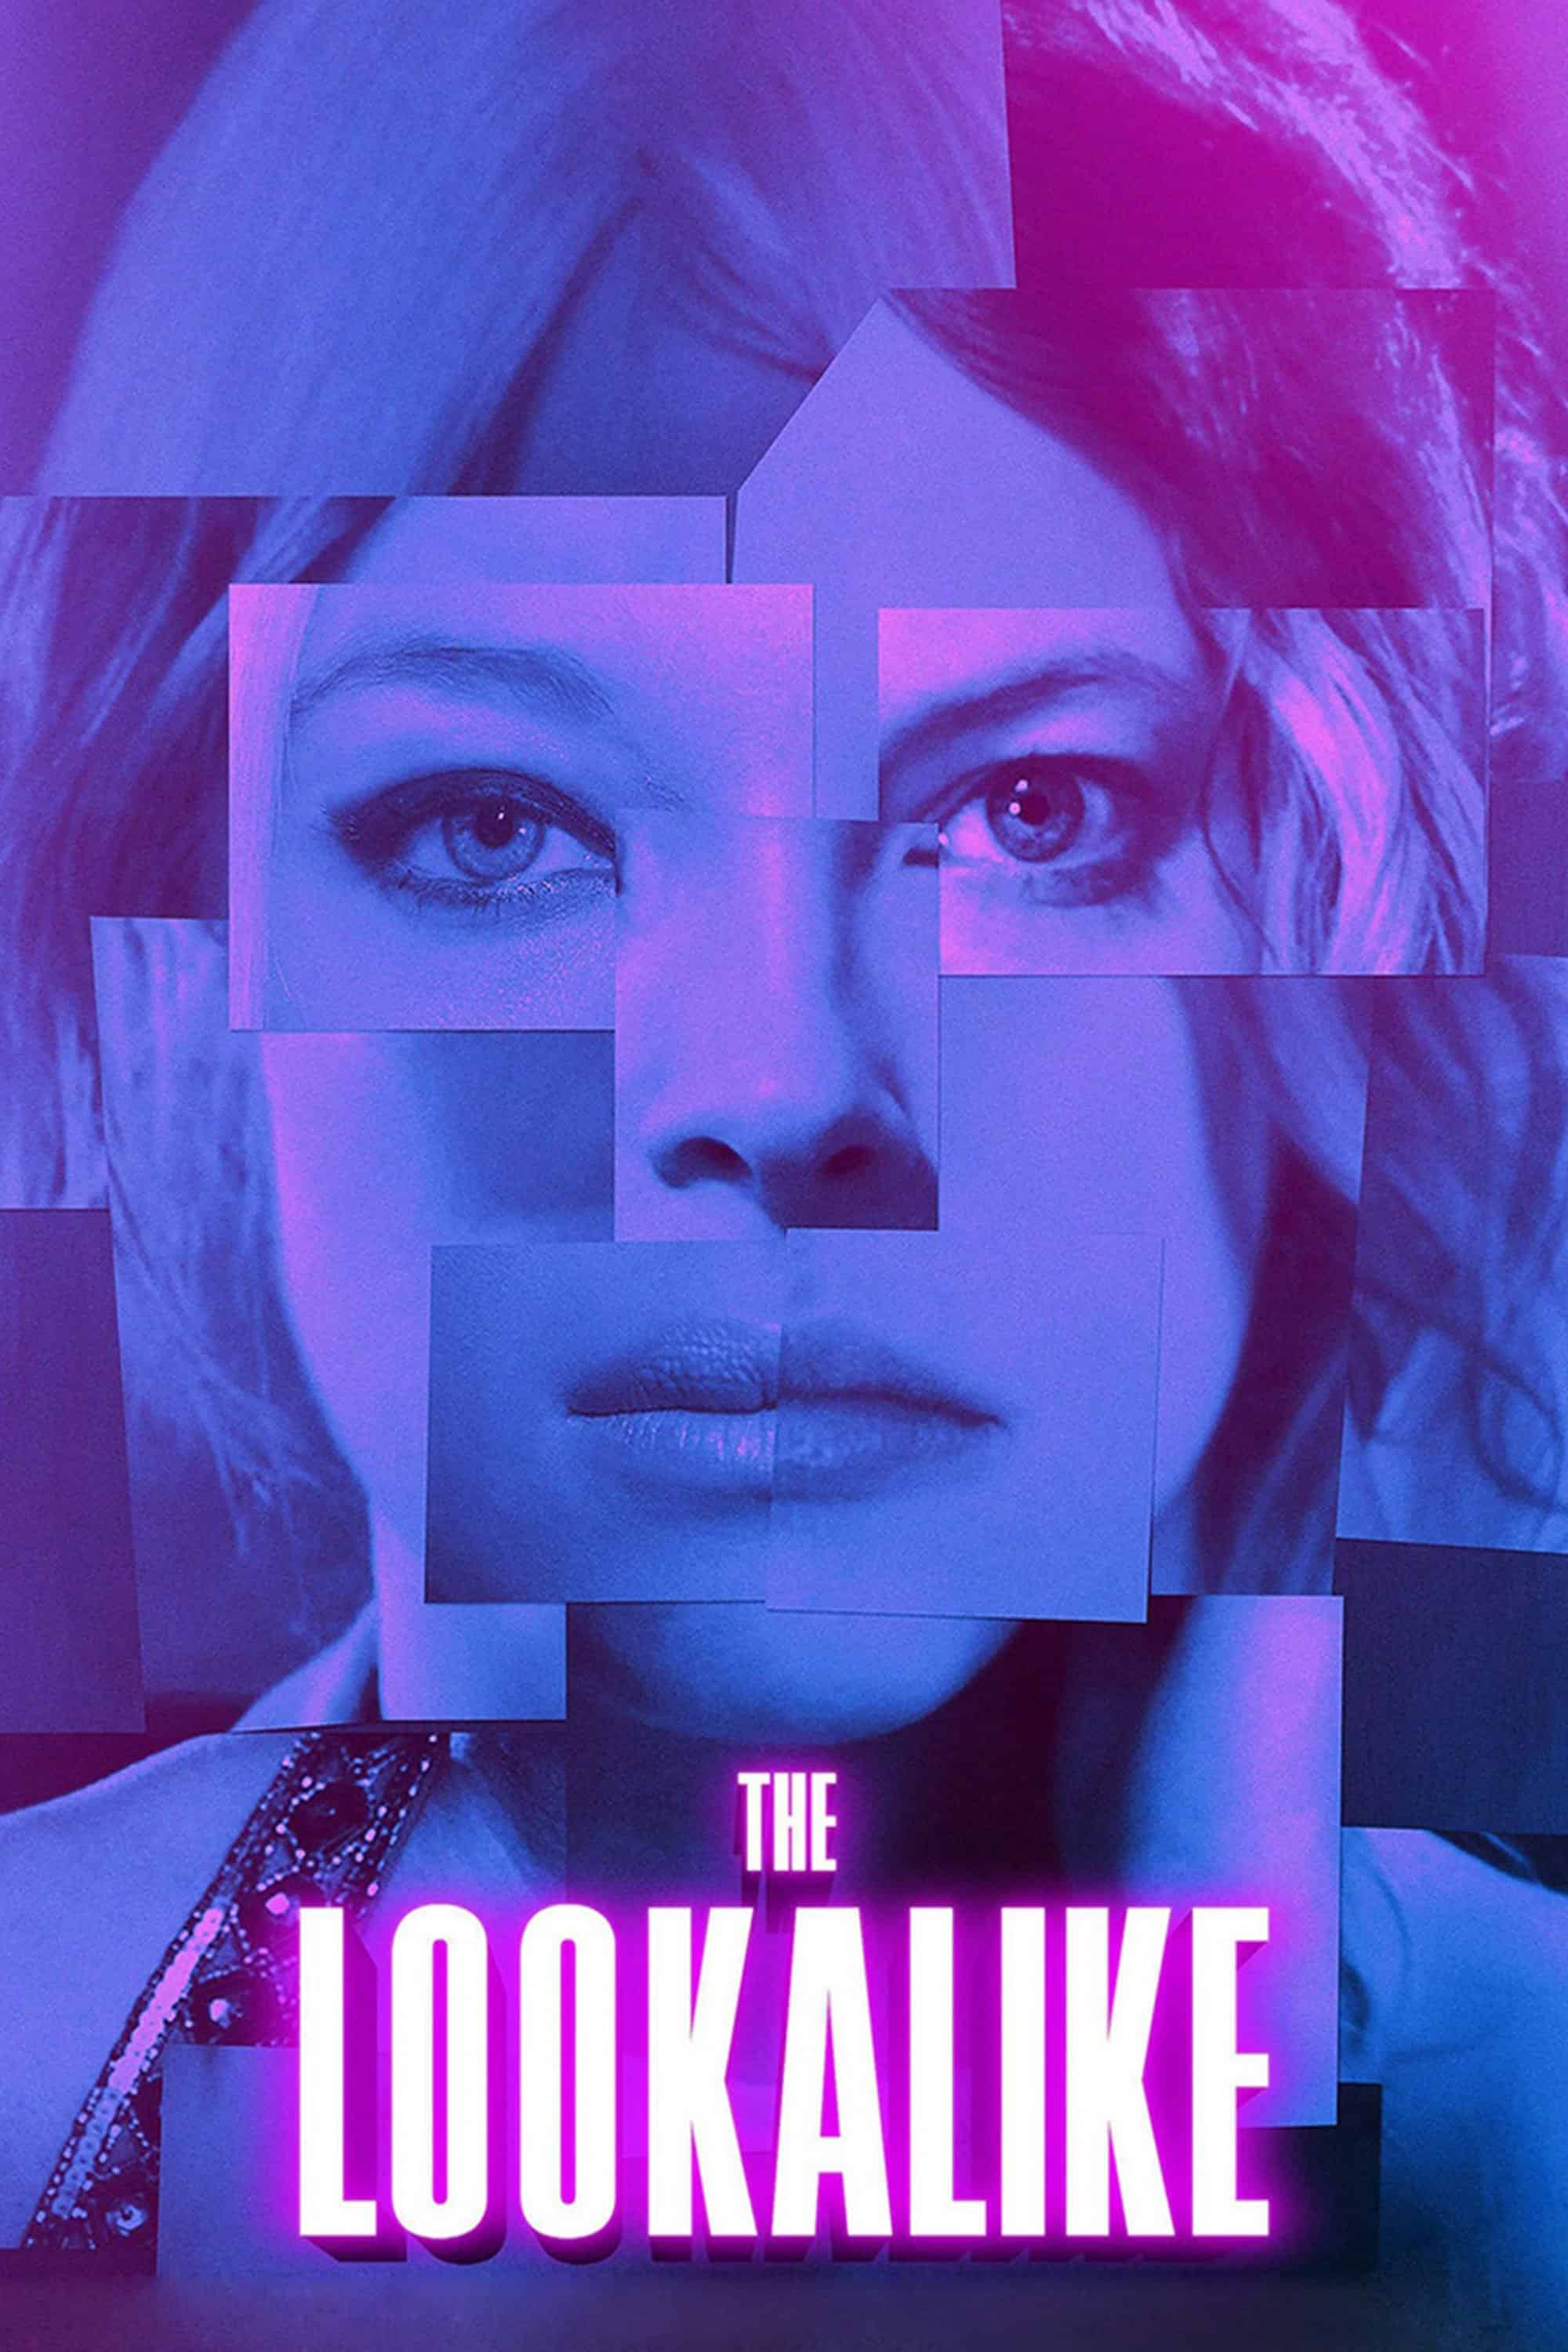 The Lookalike, 2014 